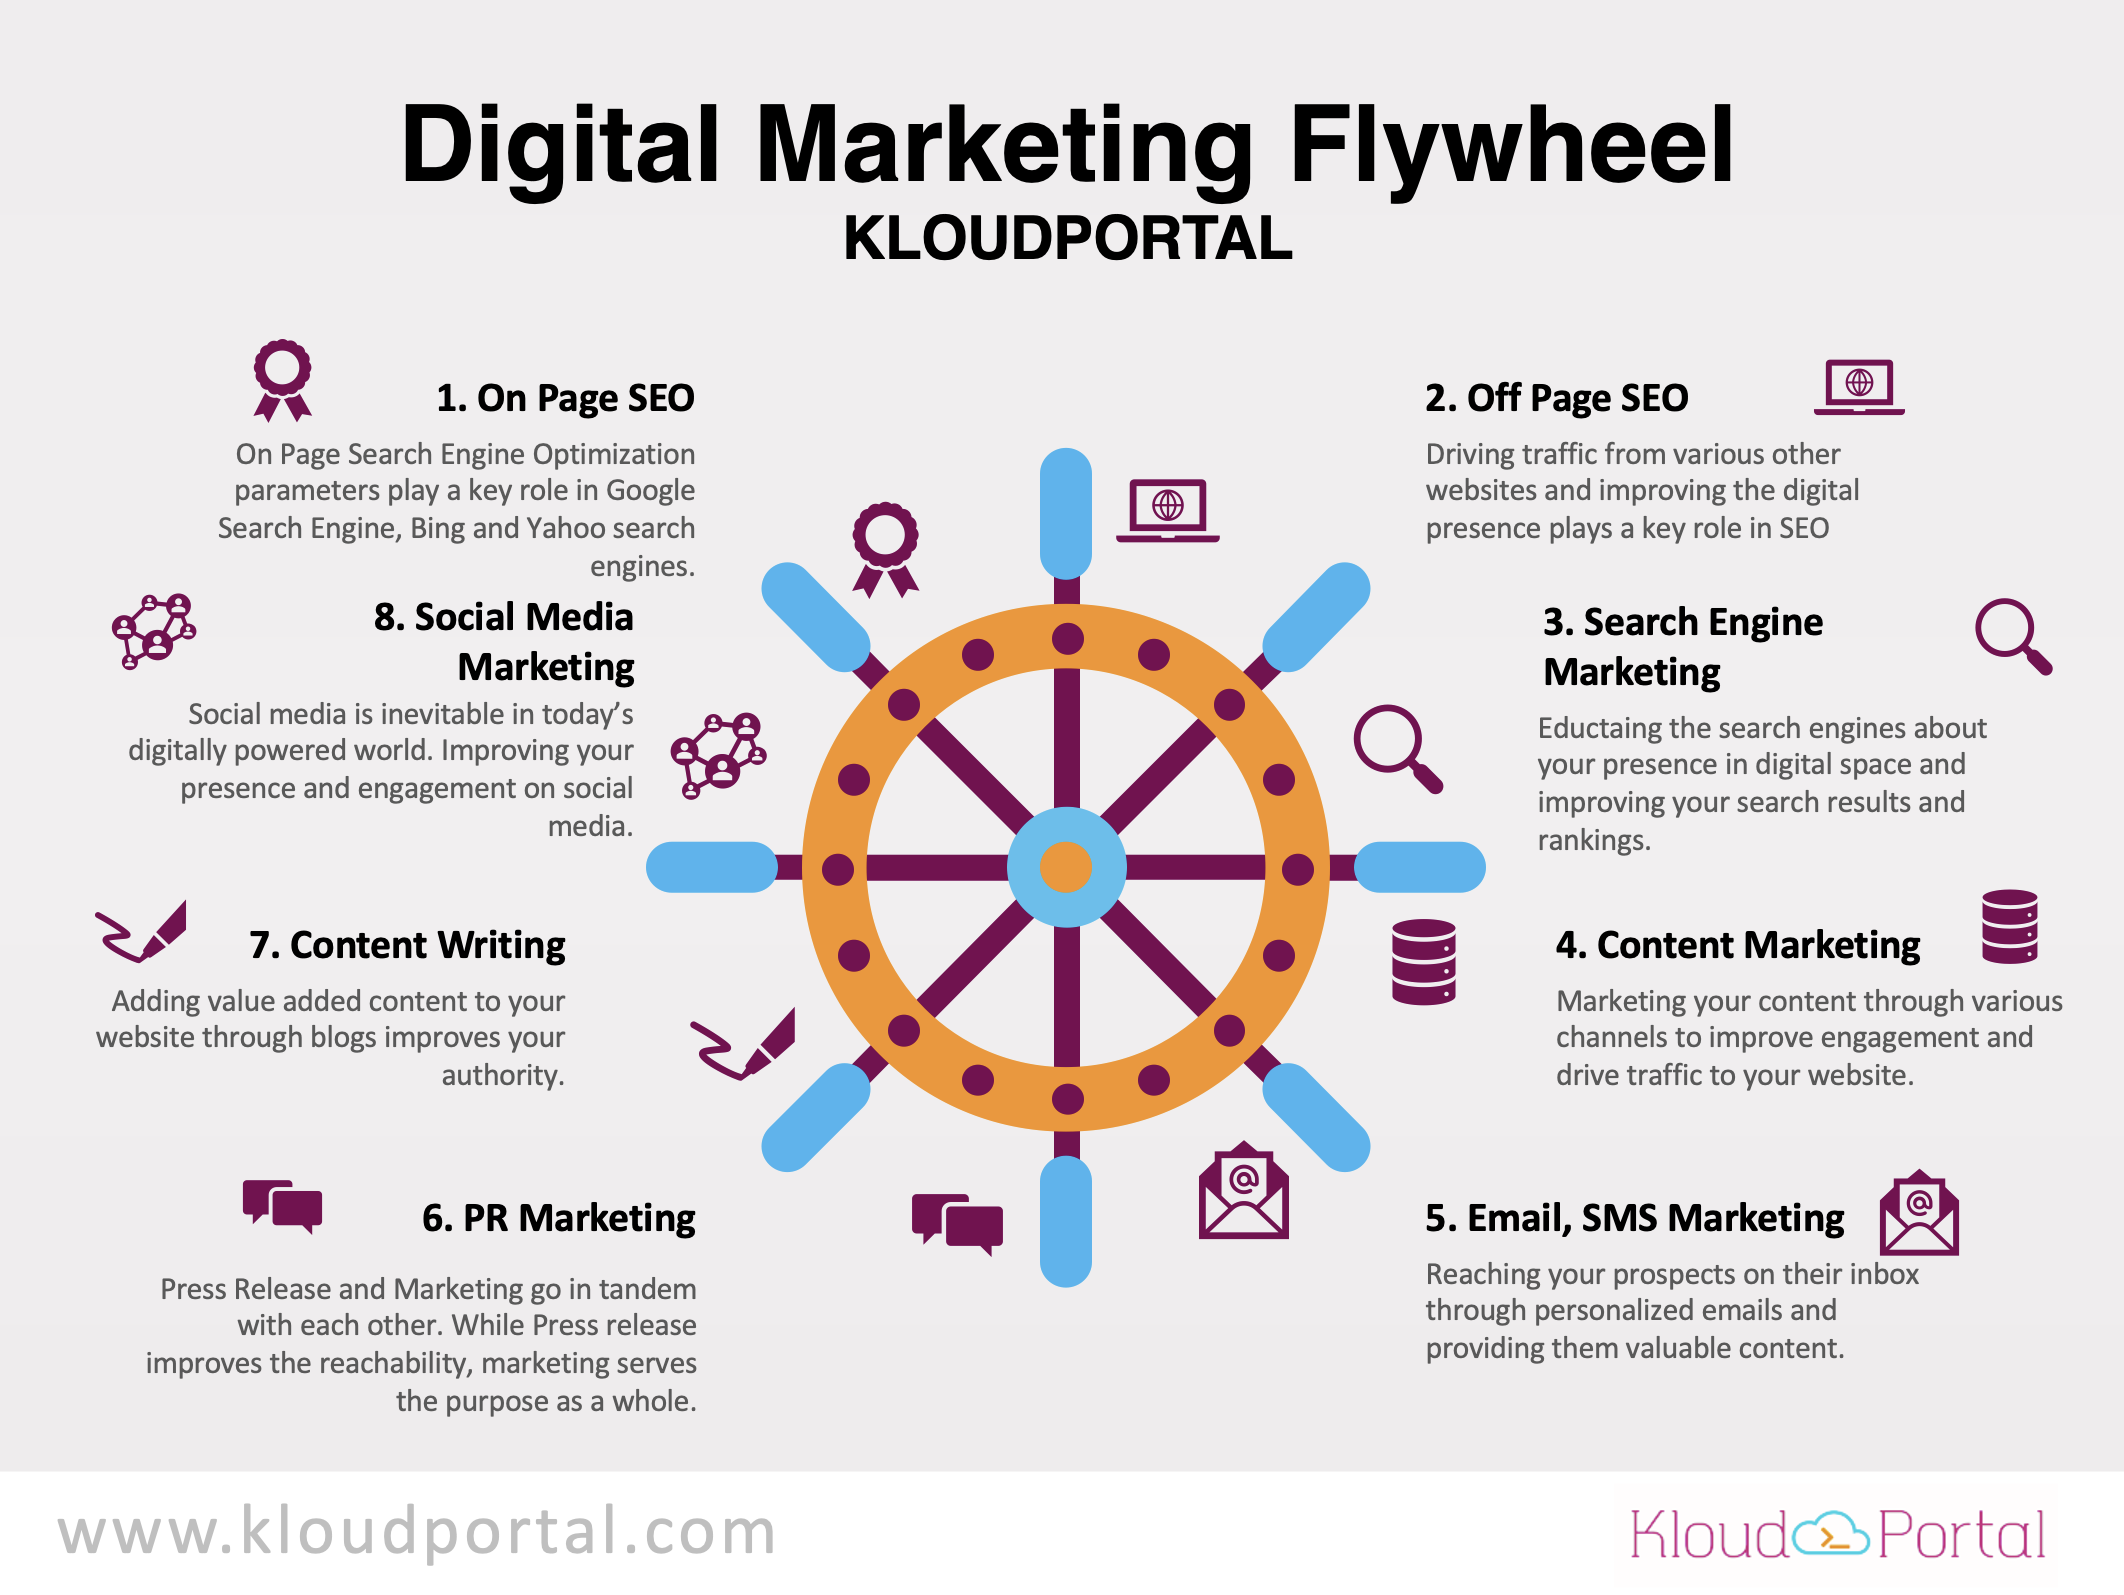 Digital Marketing Flywheel for Kloudportal. 